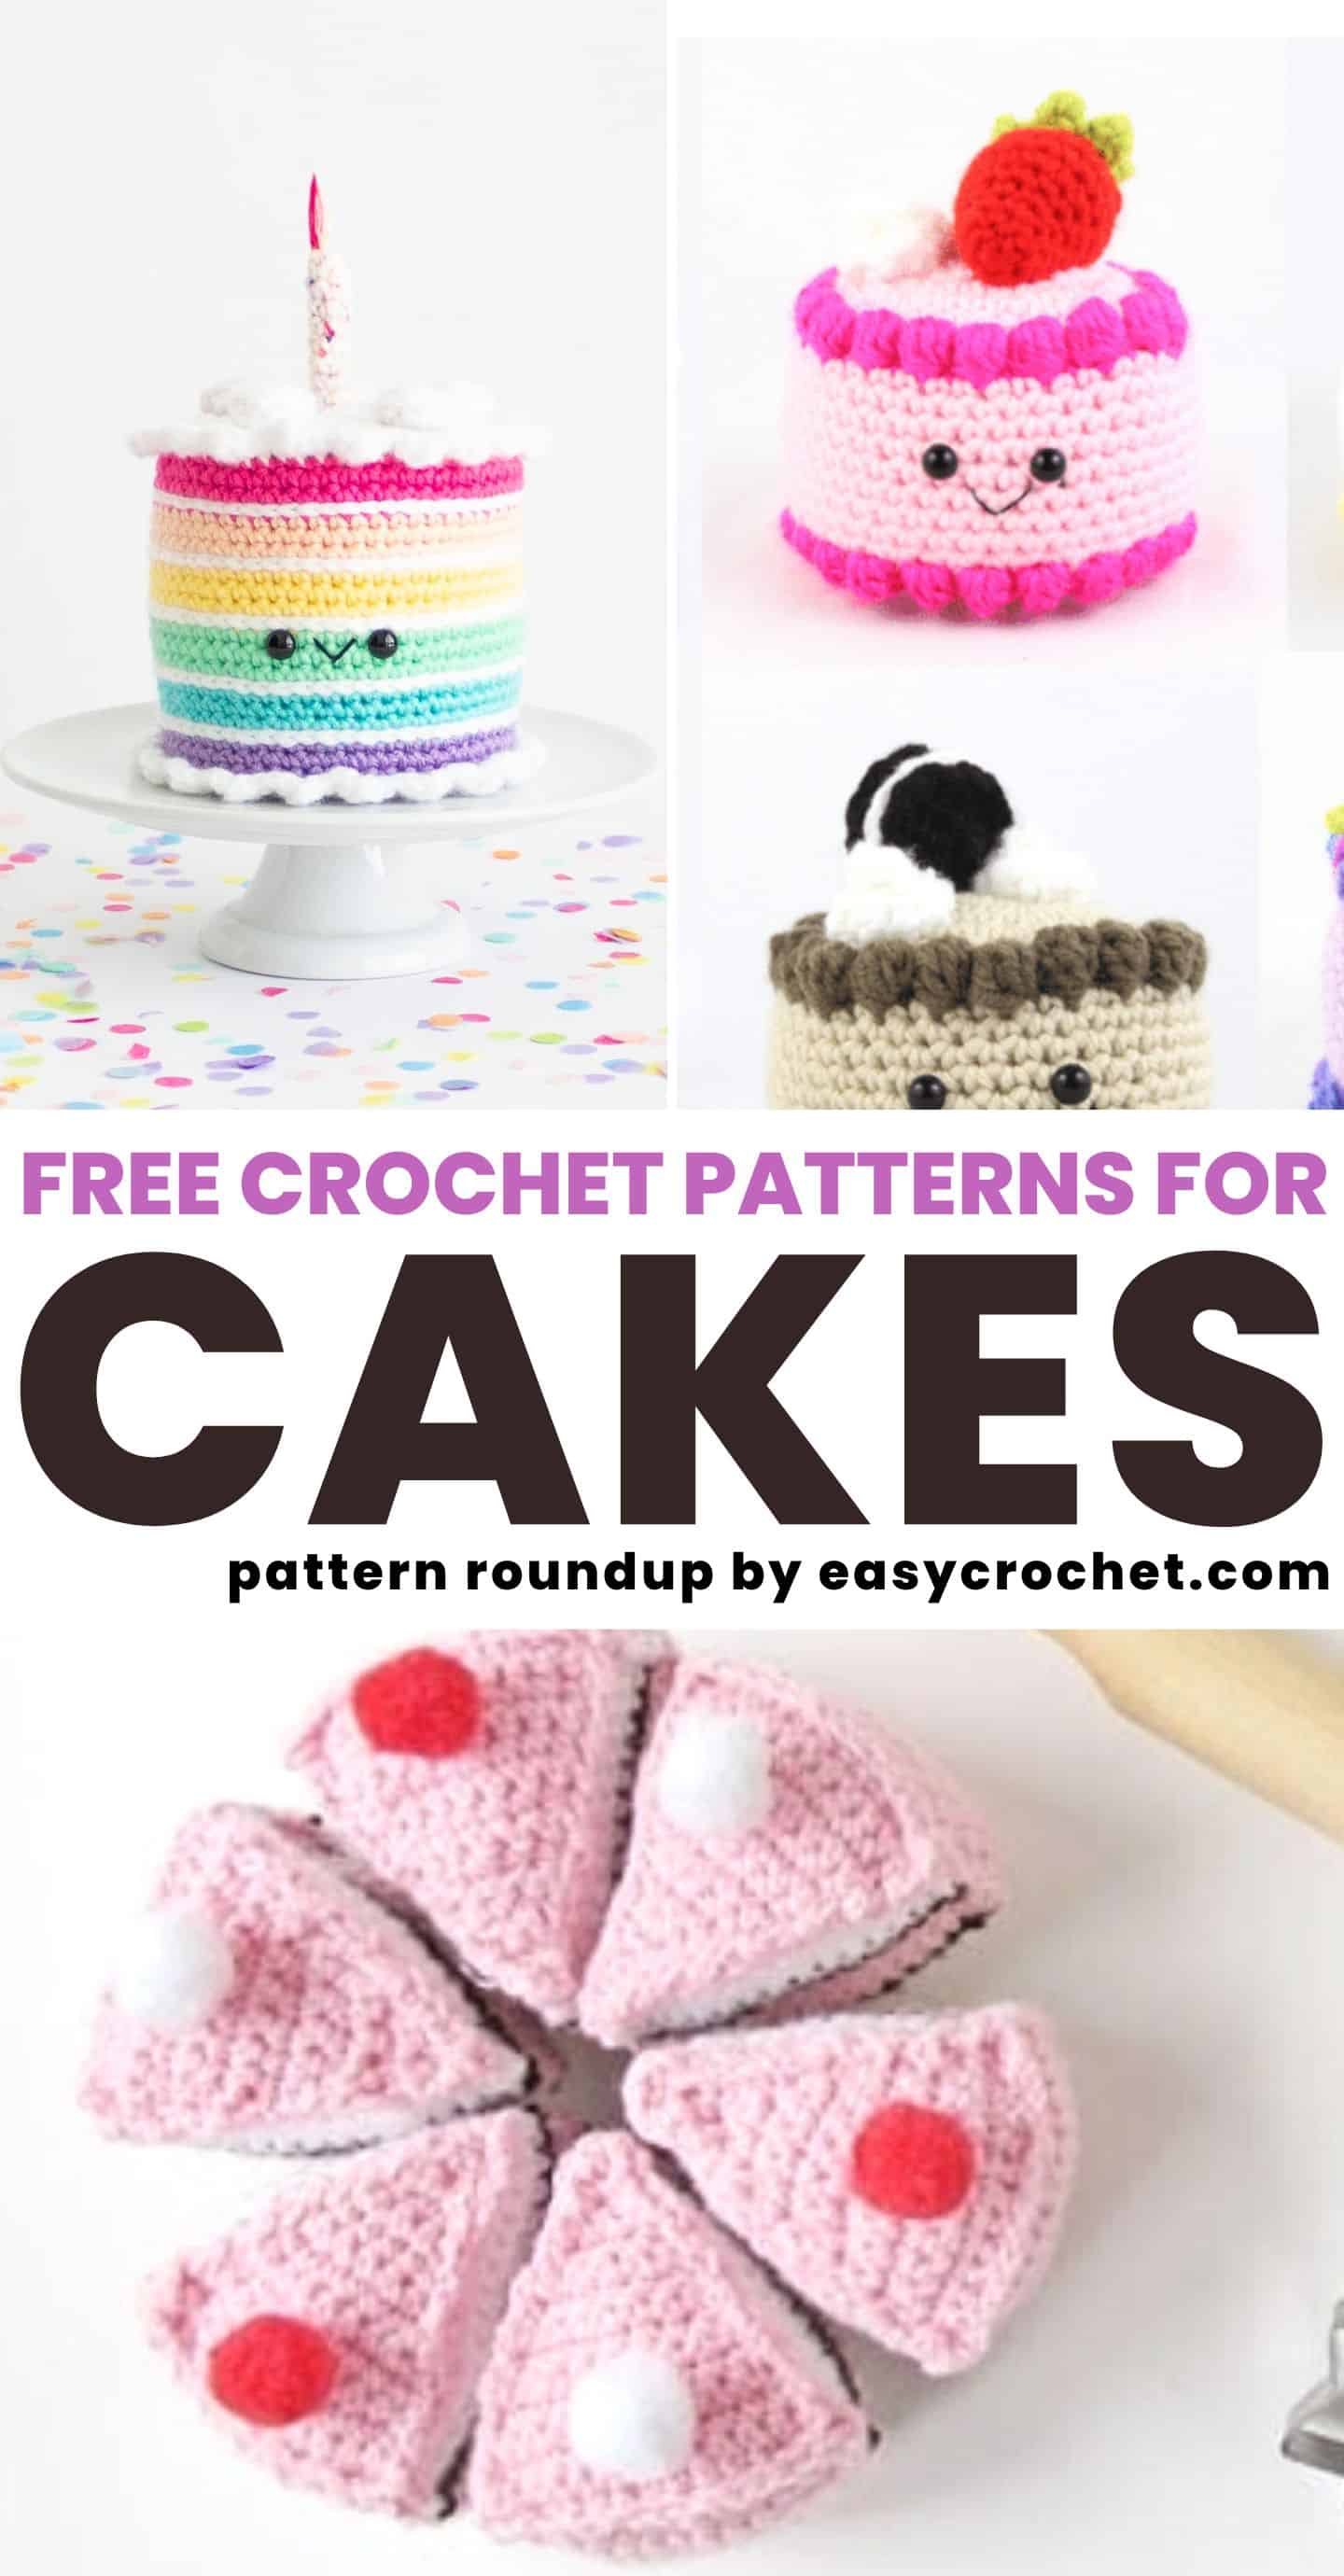 learn how to make a crocheted cake • craft • frankie magazine • australian  fashion magazine online